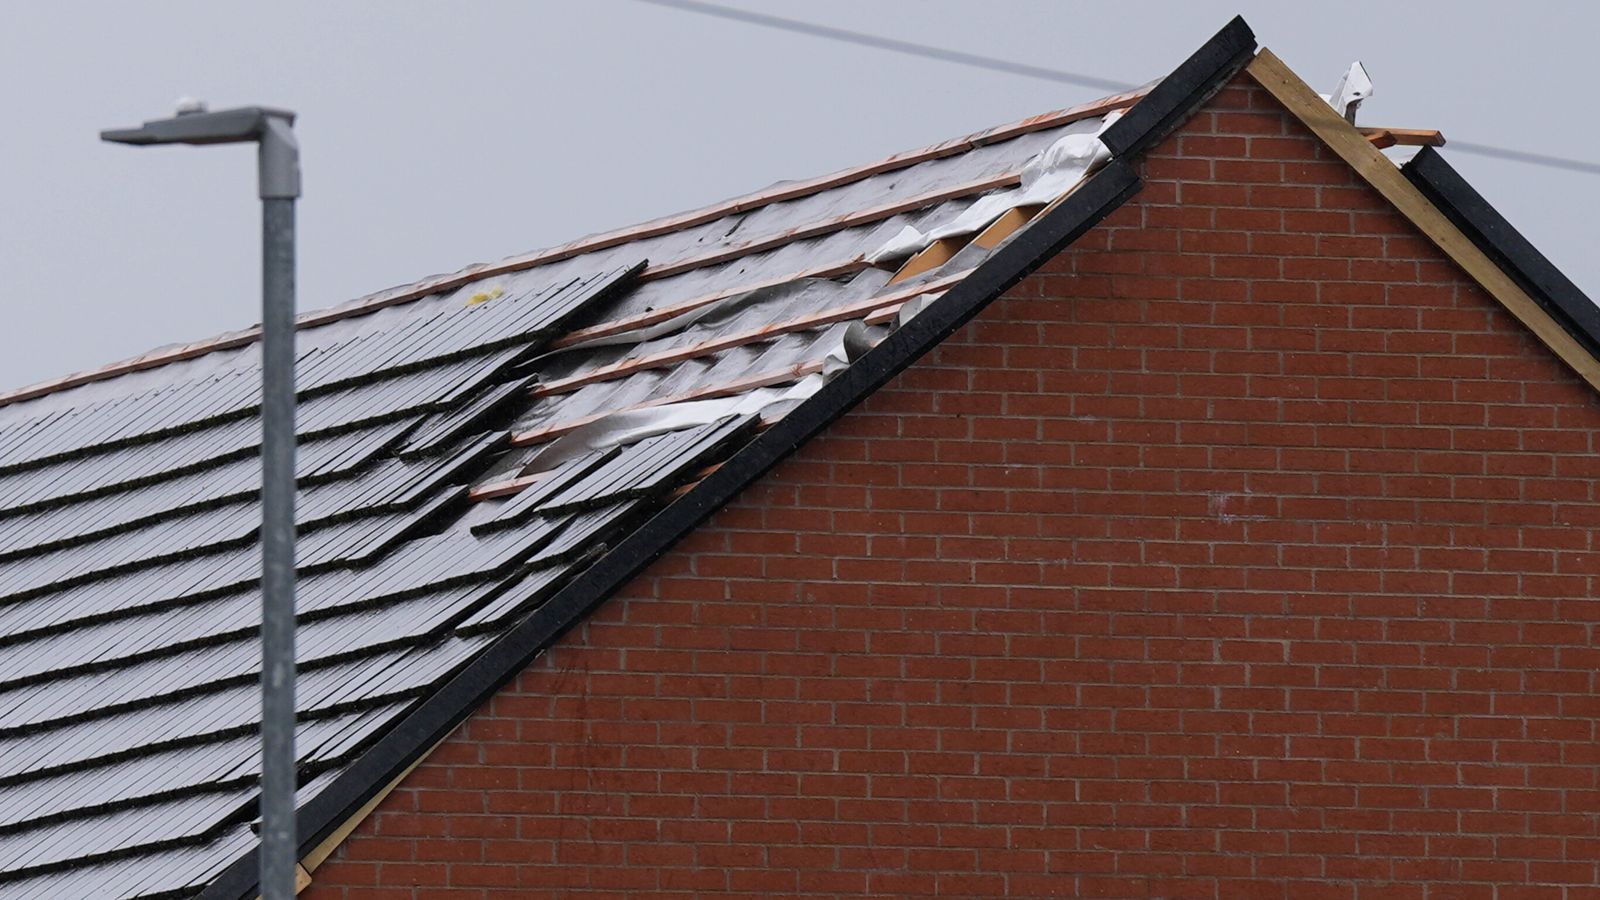 'tornado' hits town as severe wind warnings issued across uk